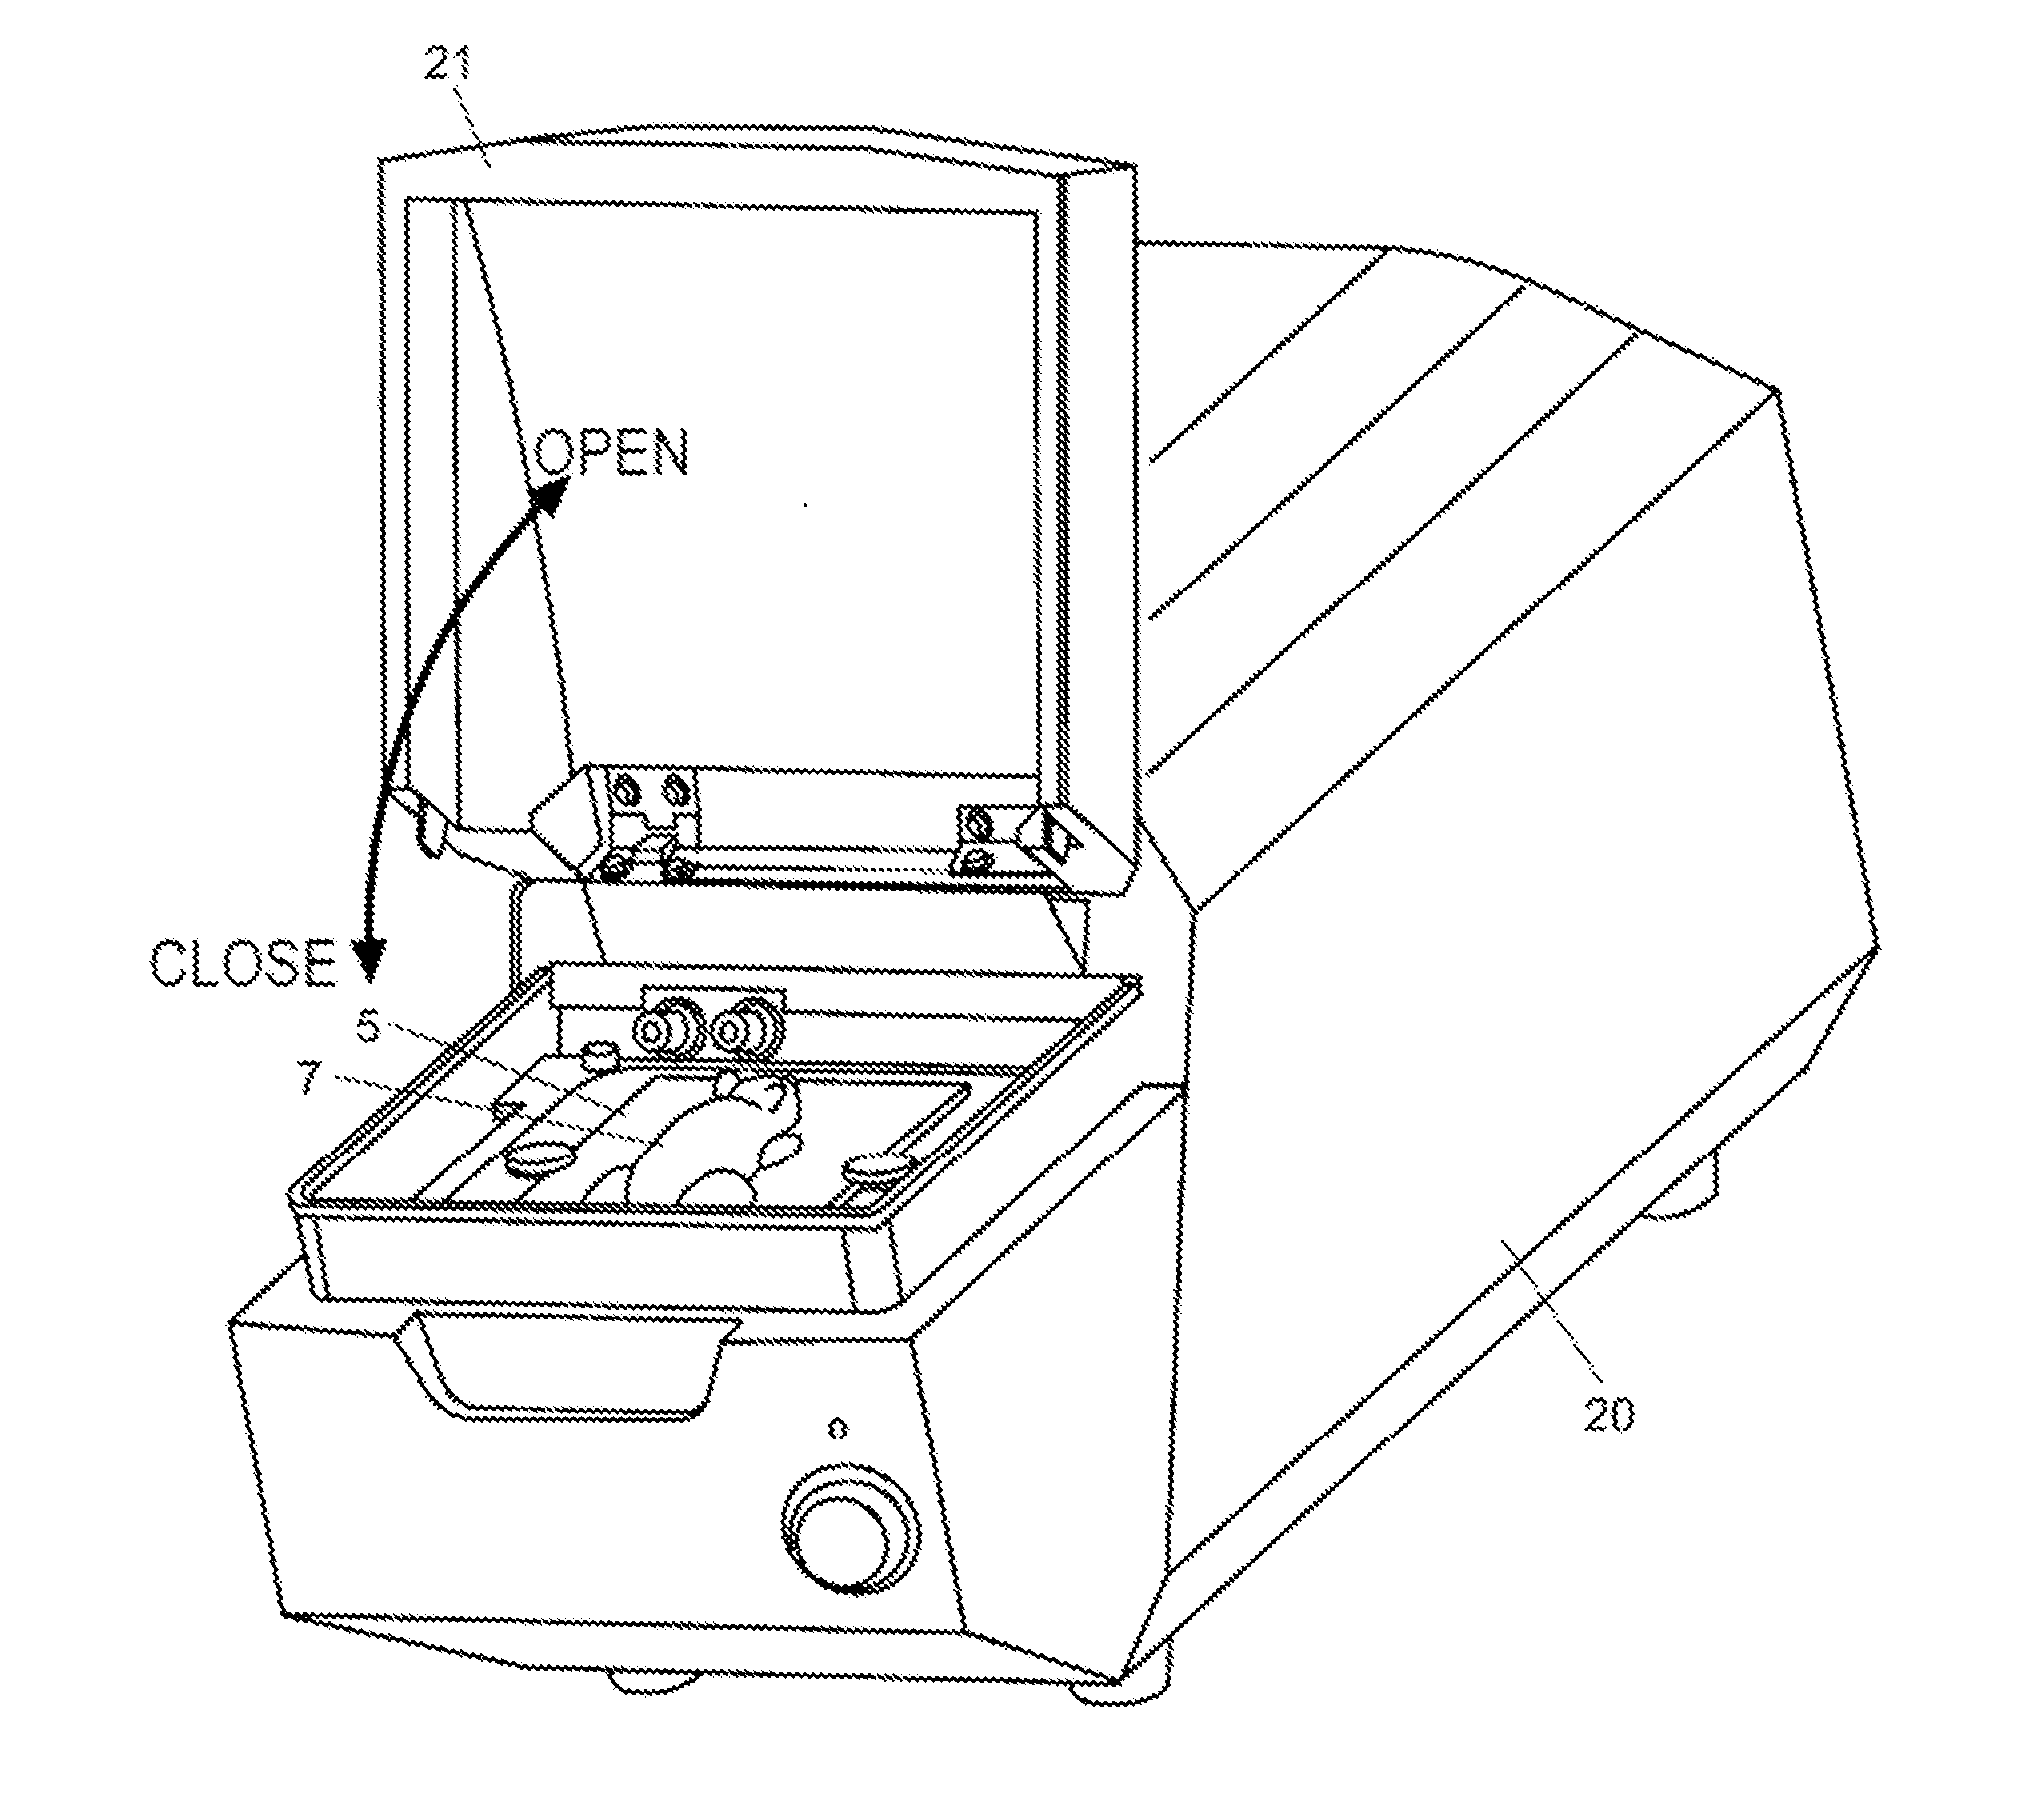 Optical imaging apparatus